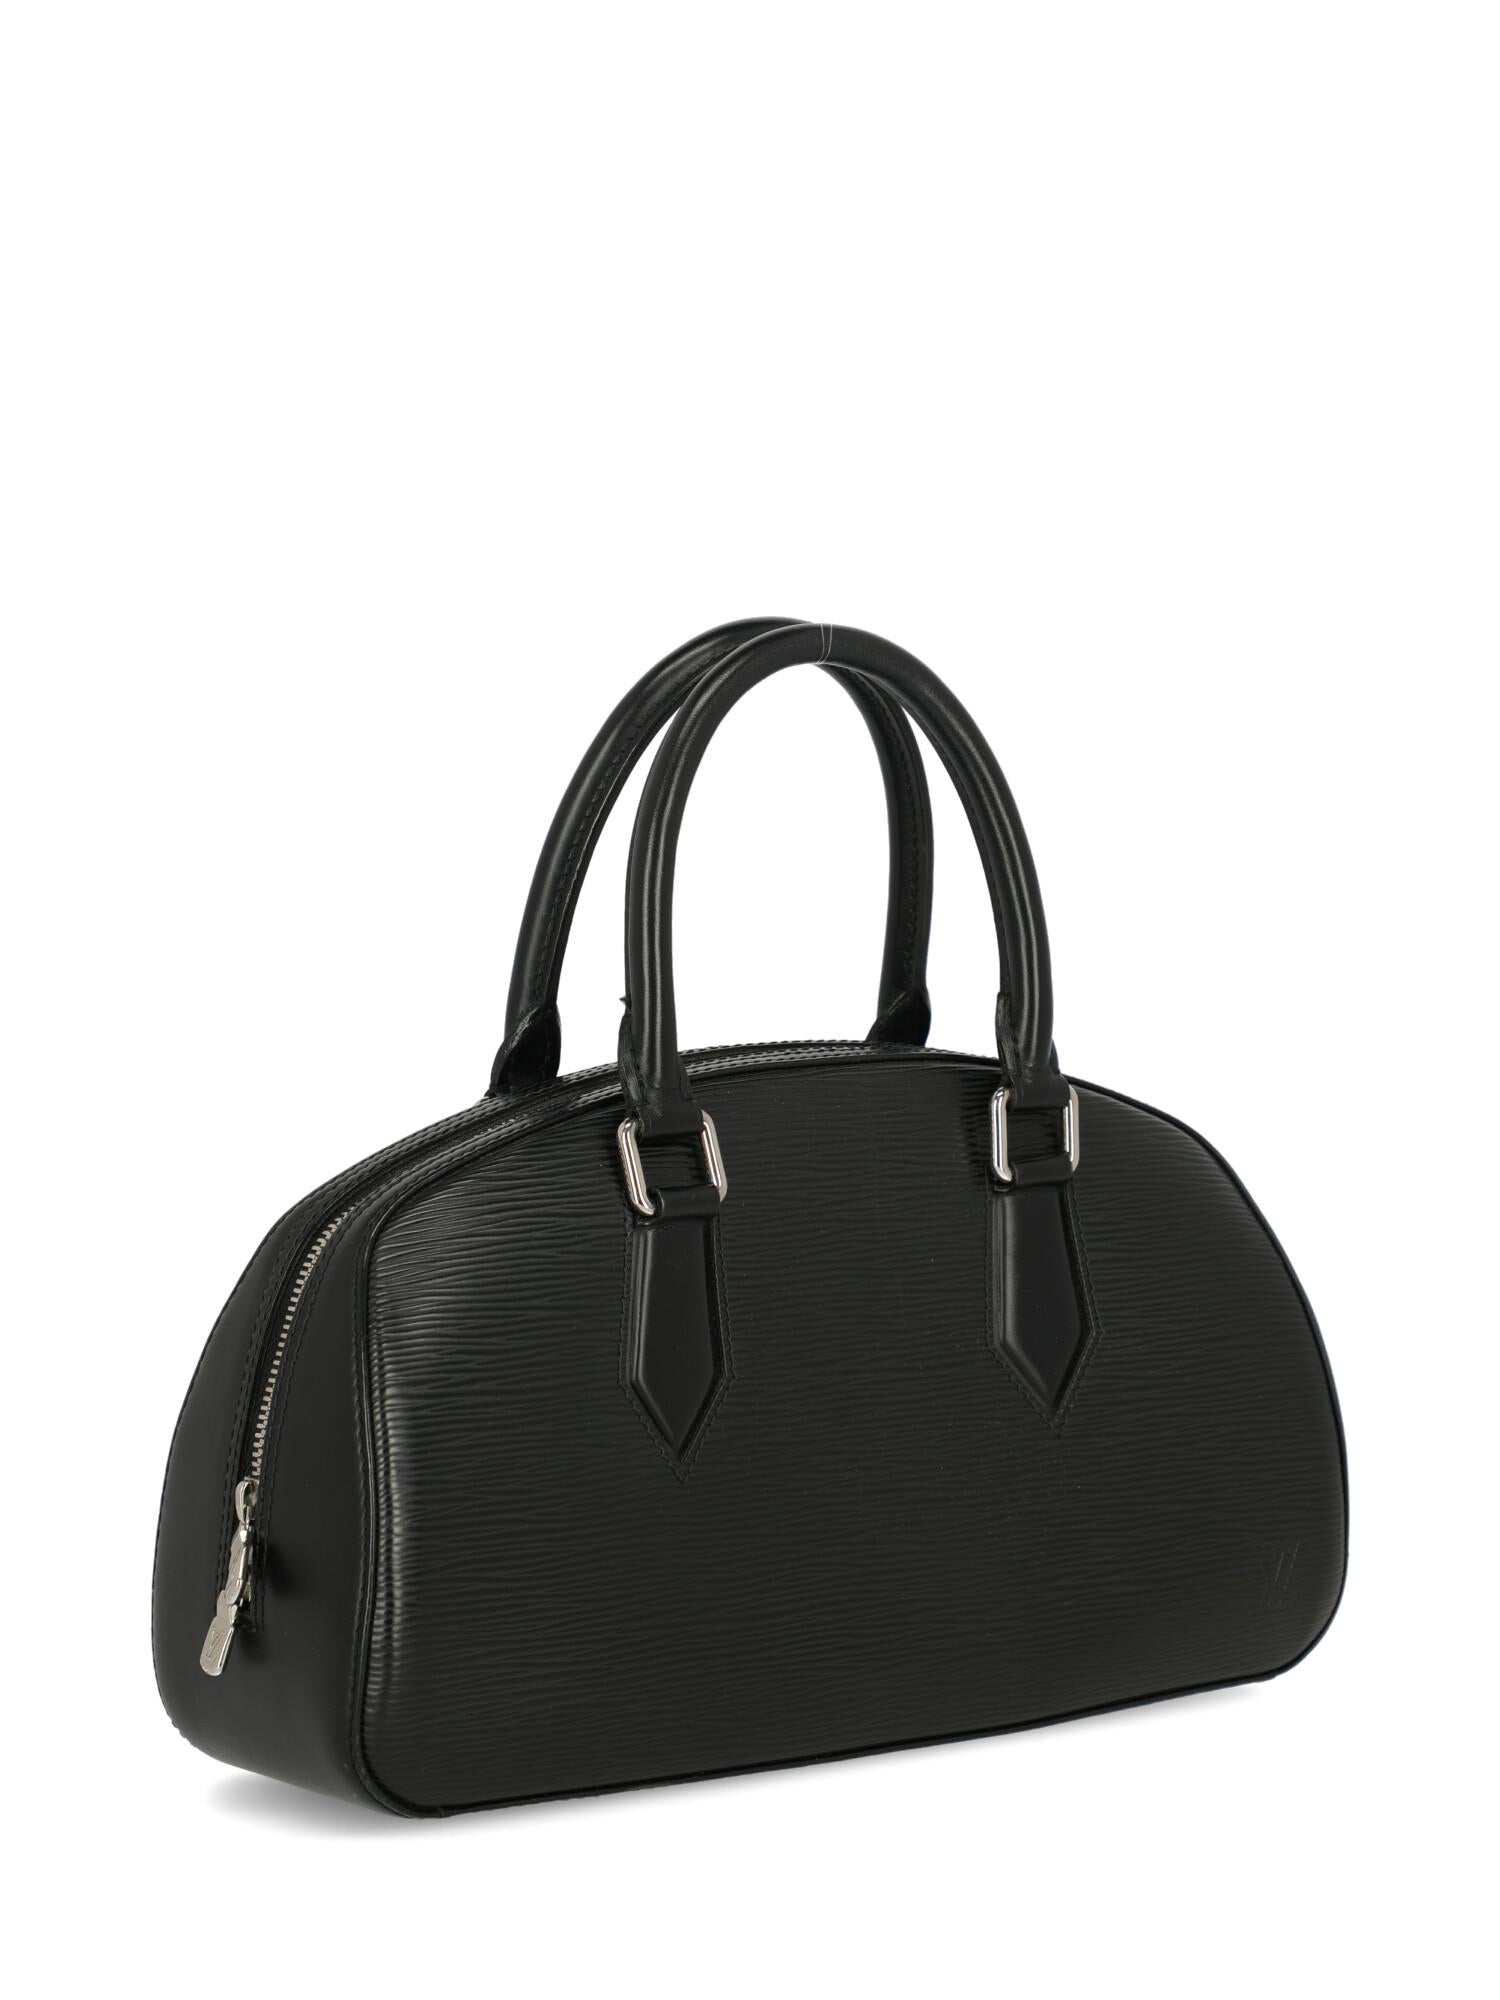 louis vuitton women's handbags